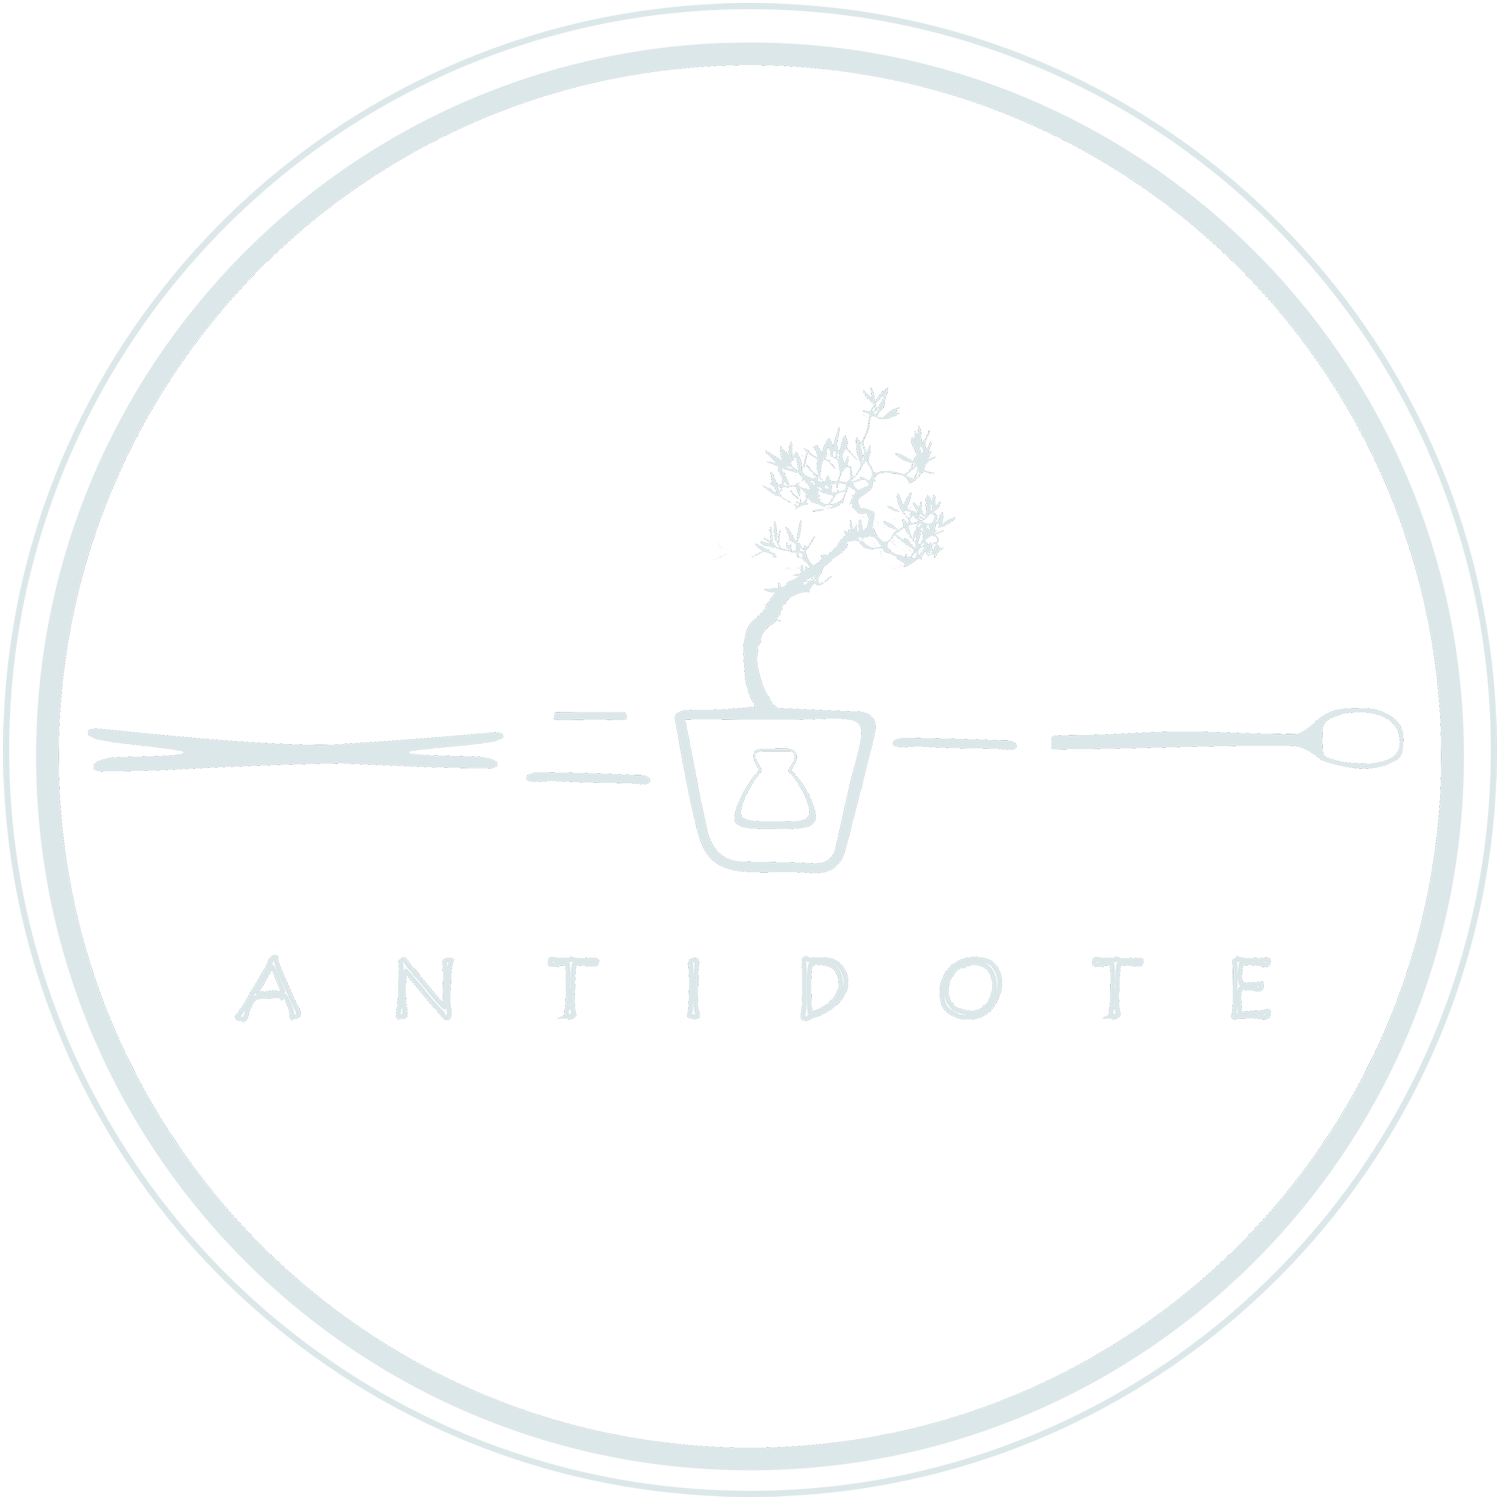 Antidote logo top - Homepage